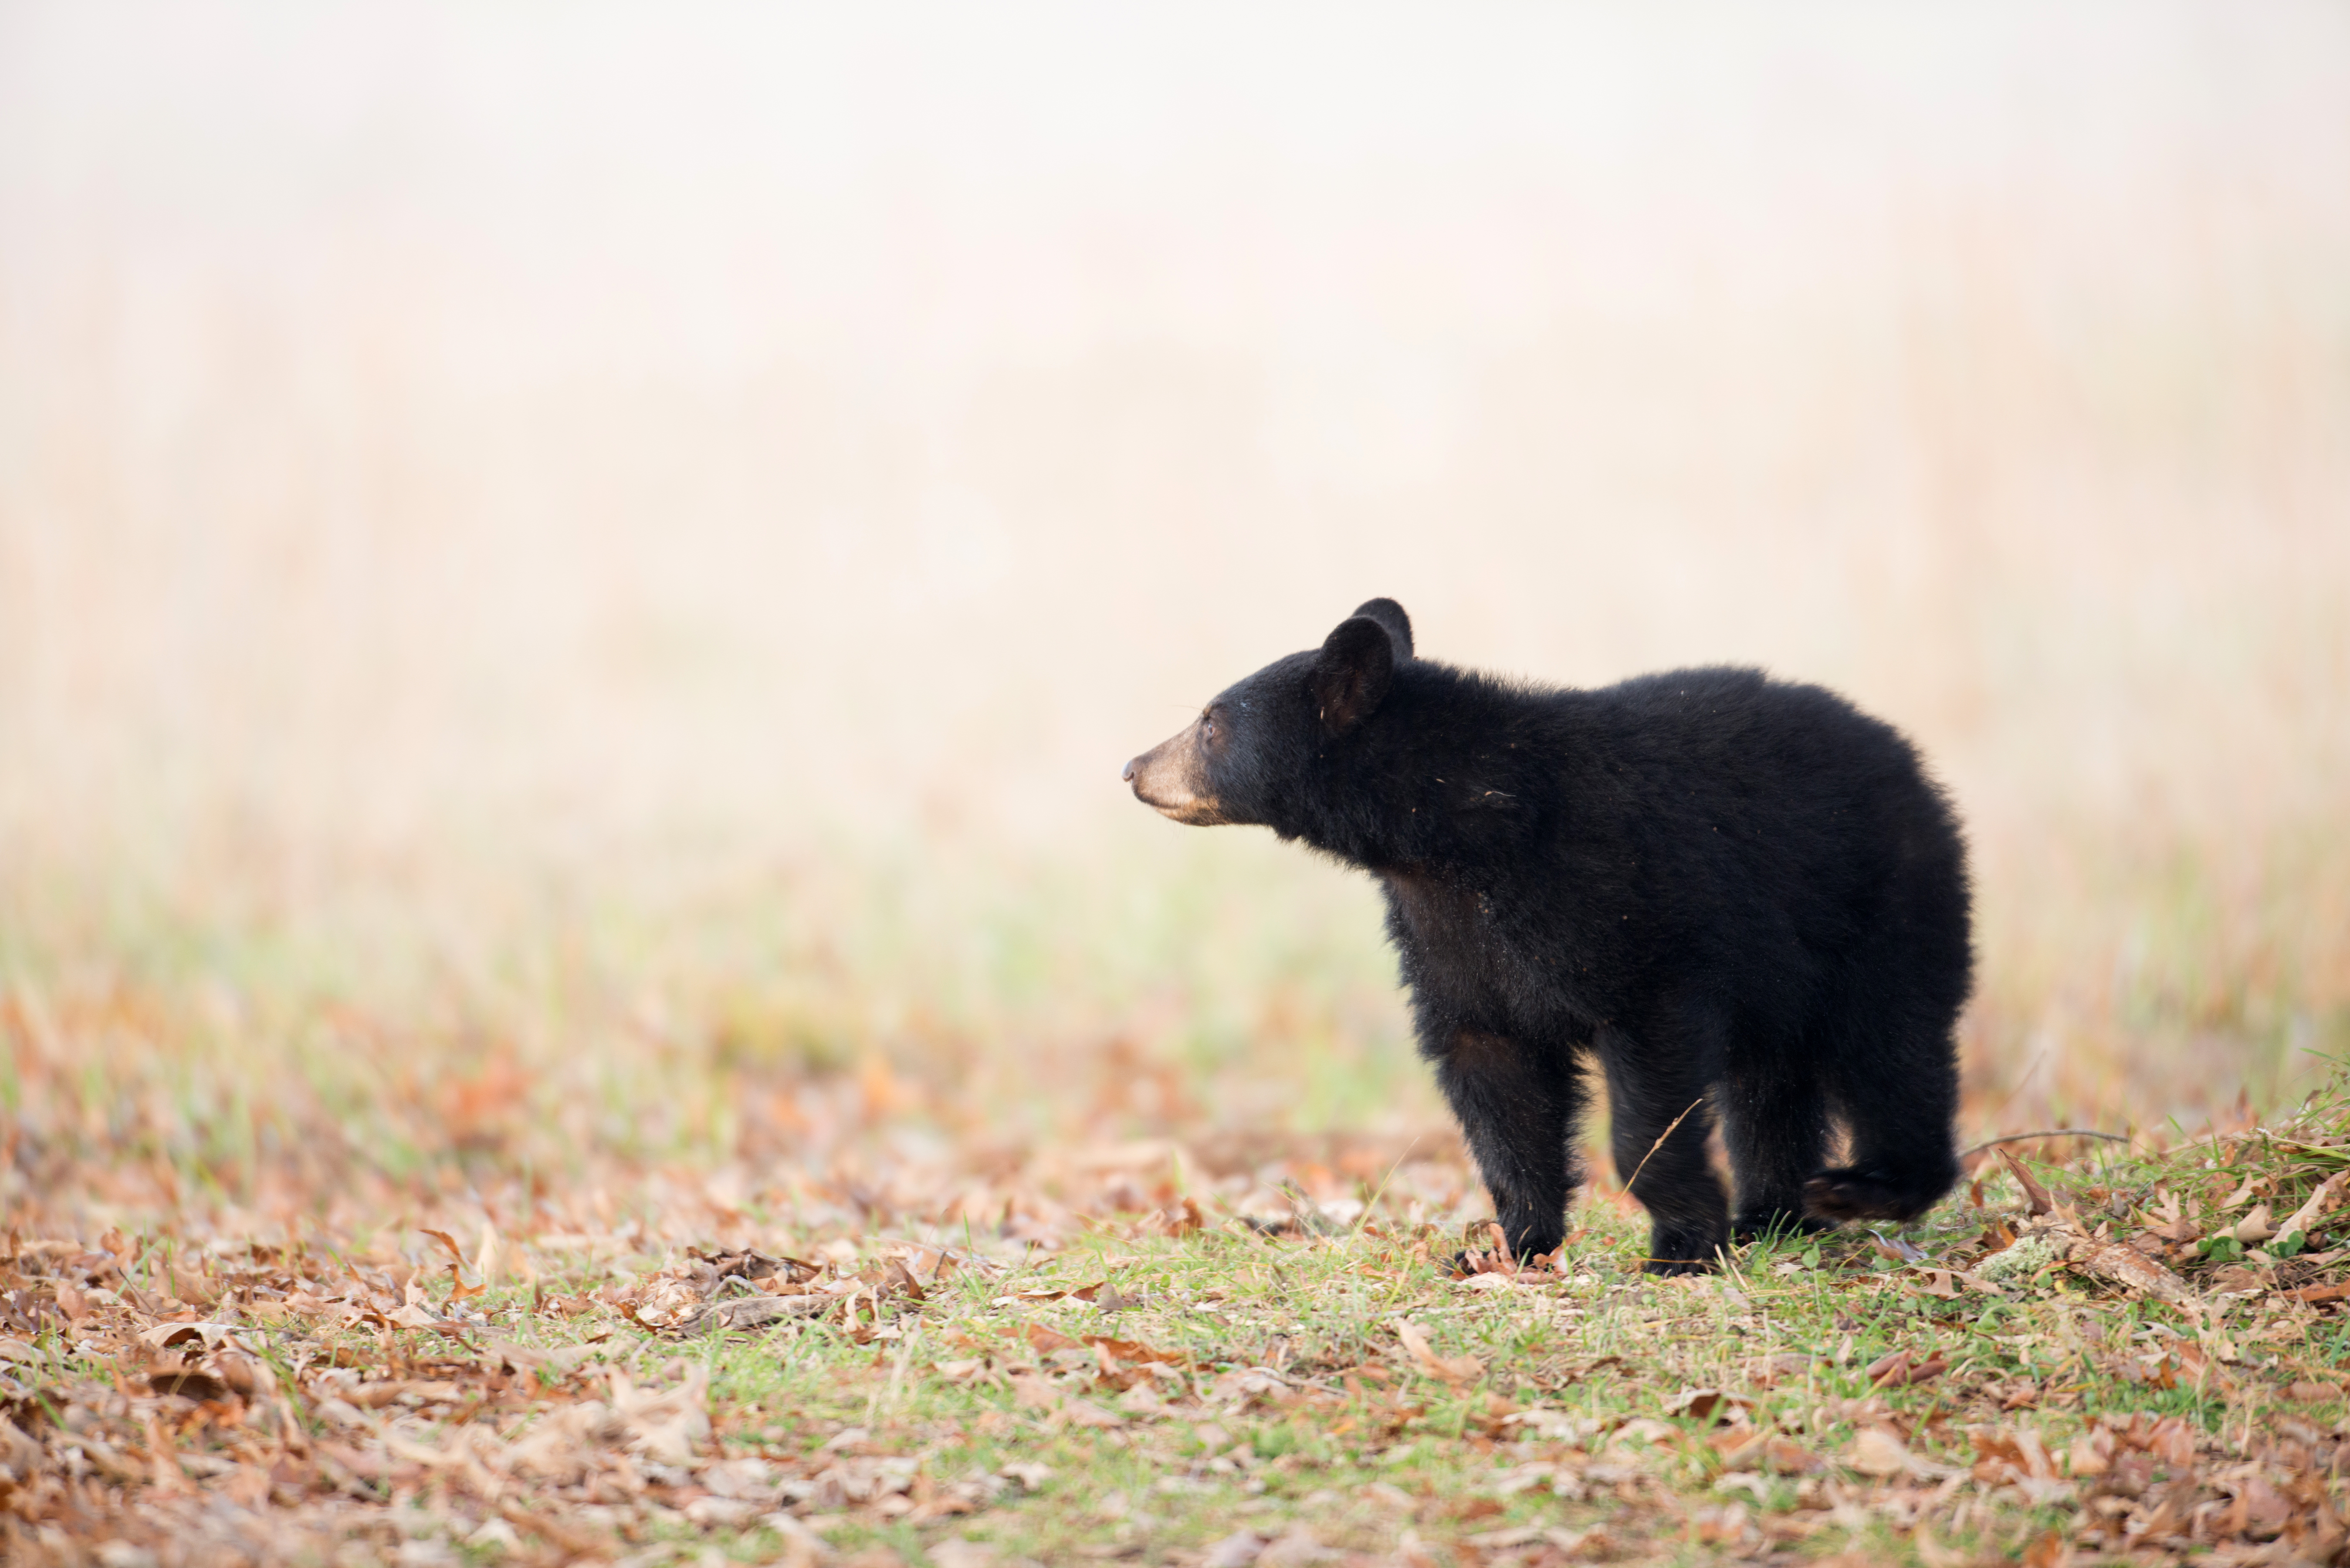 Black bear cub in Smoky Mountain National Park